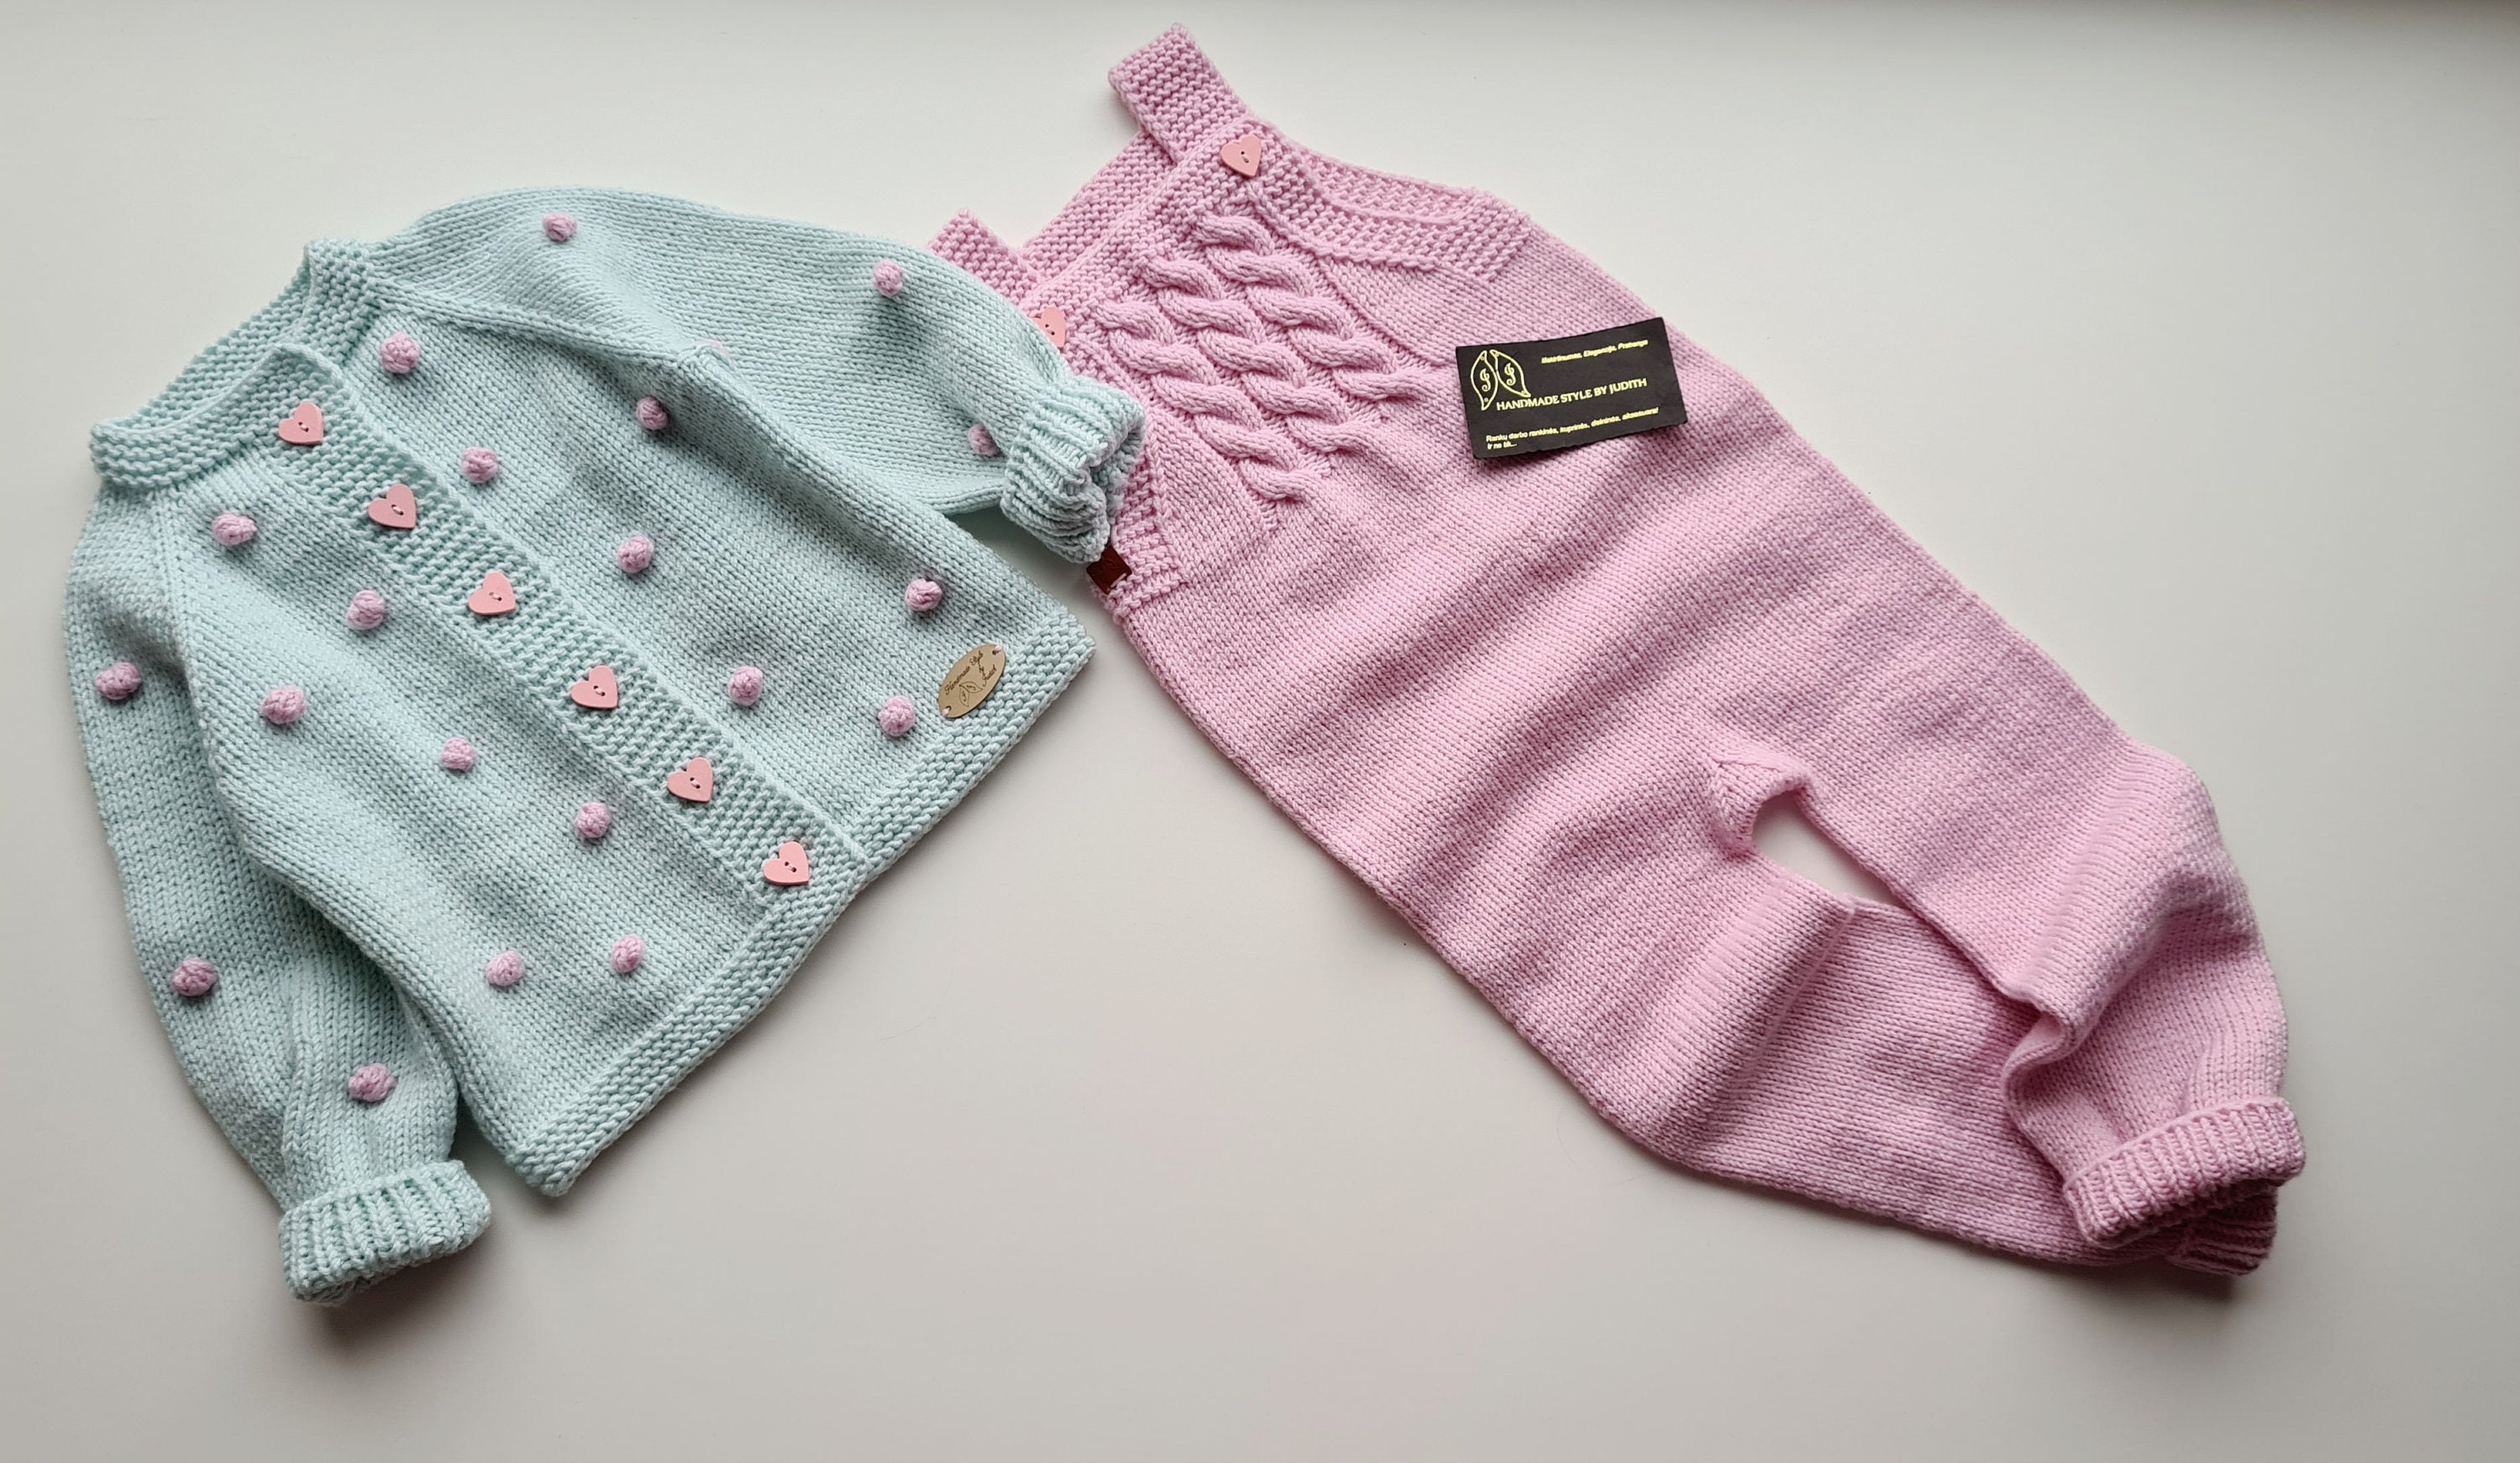 latestsweater #knittingbabyjumpsuit #fashionmantra Handmade Baby woolen  jumpsuit knitting idea - YouTube